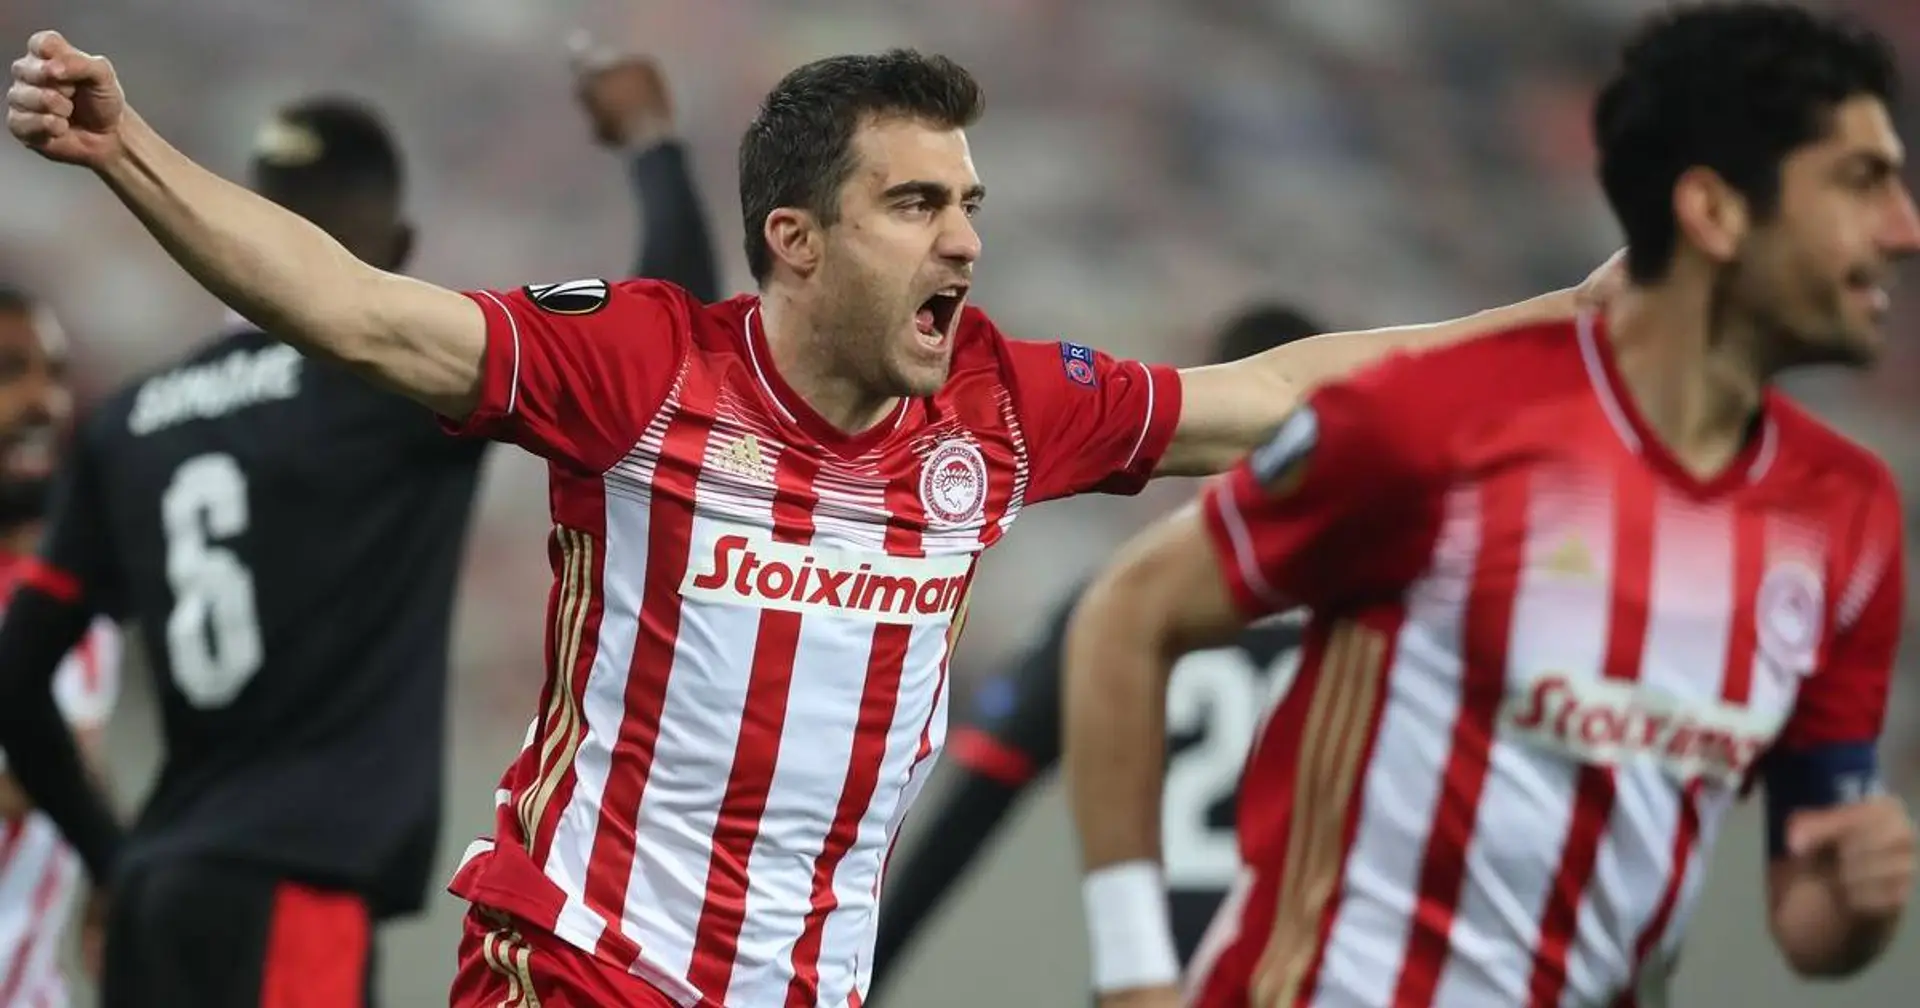 Sokratis set to start both legs vs Arsenal as Olympiacos are dealt injury blow